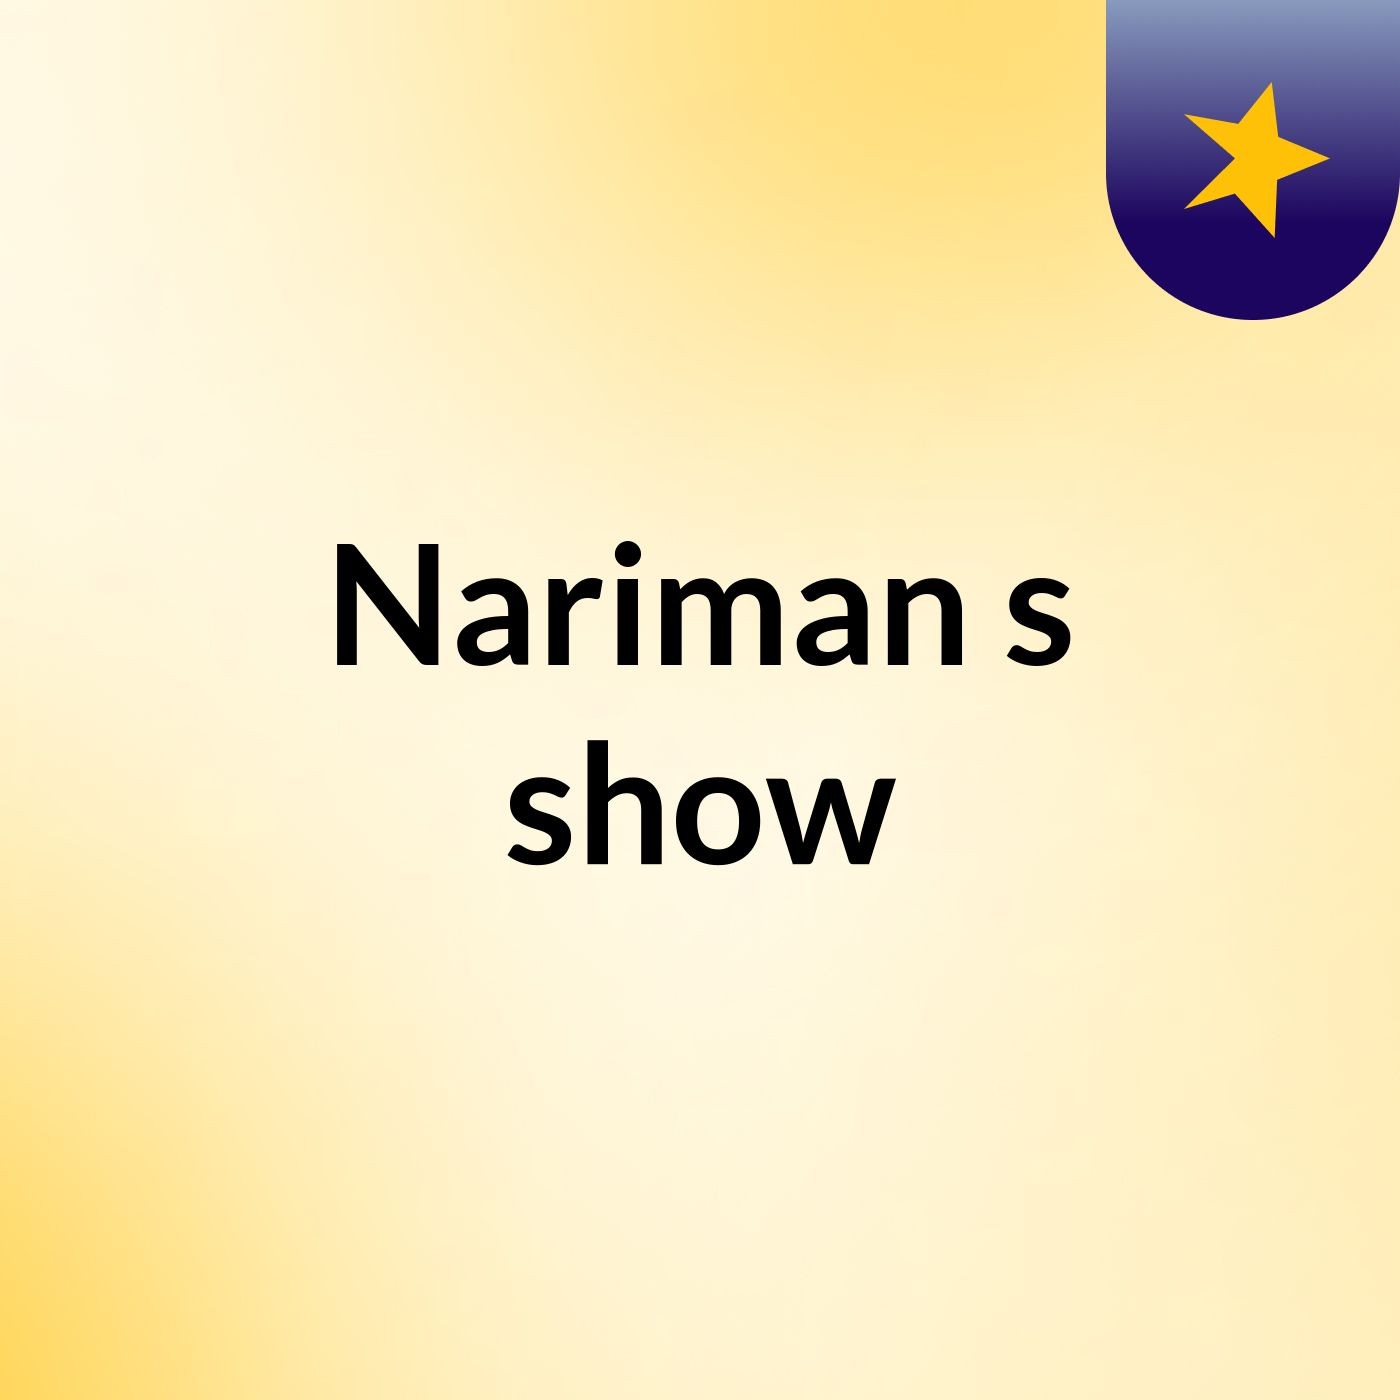 Nariman's show